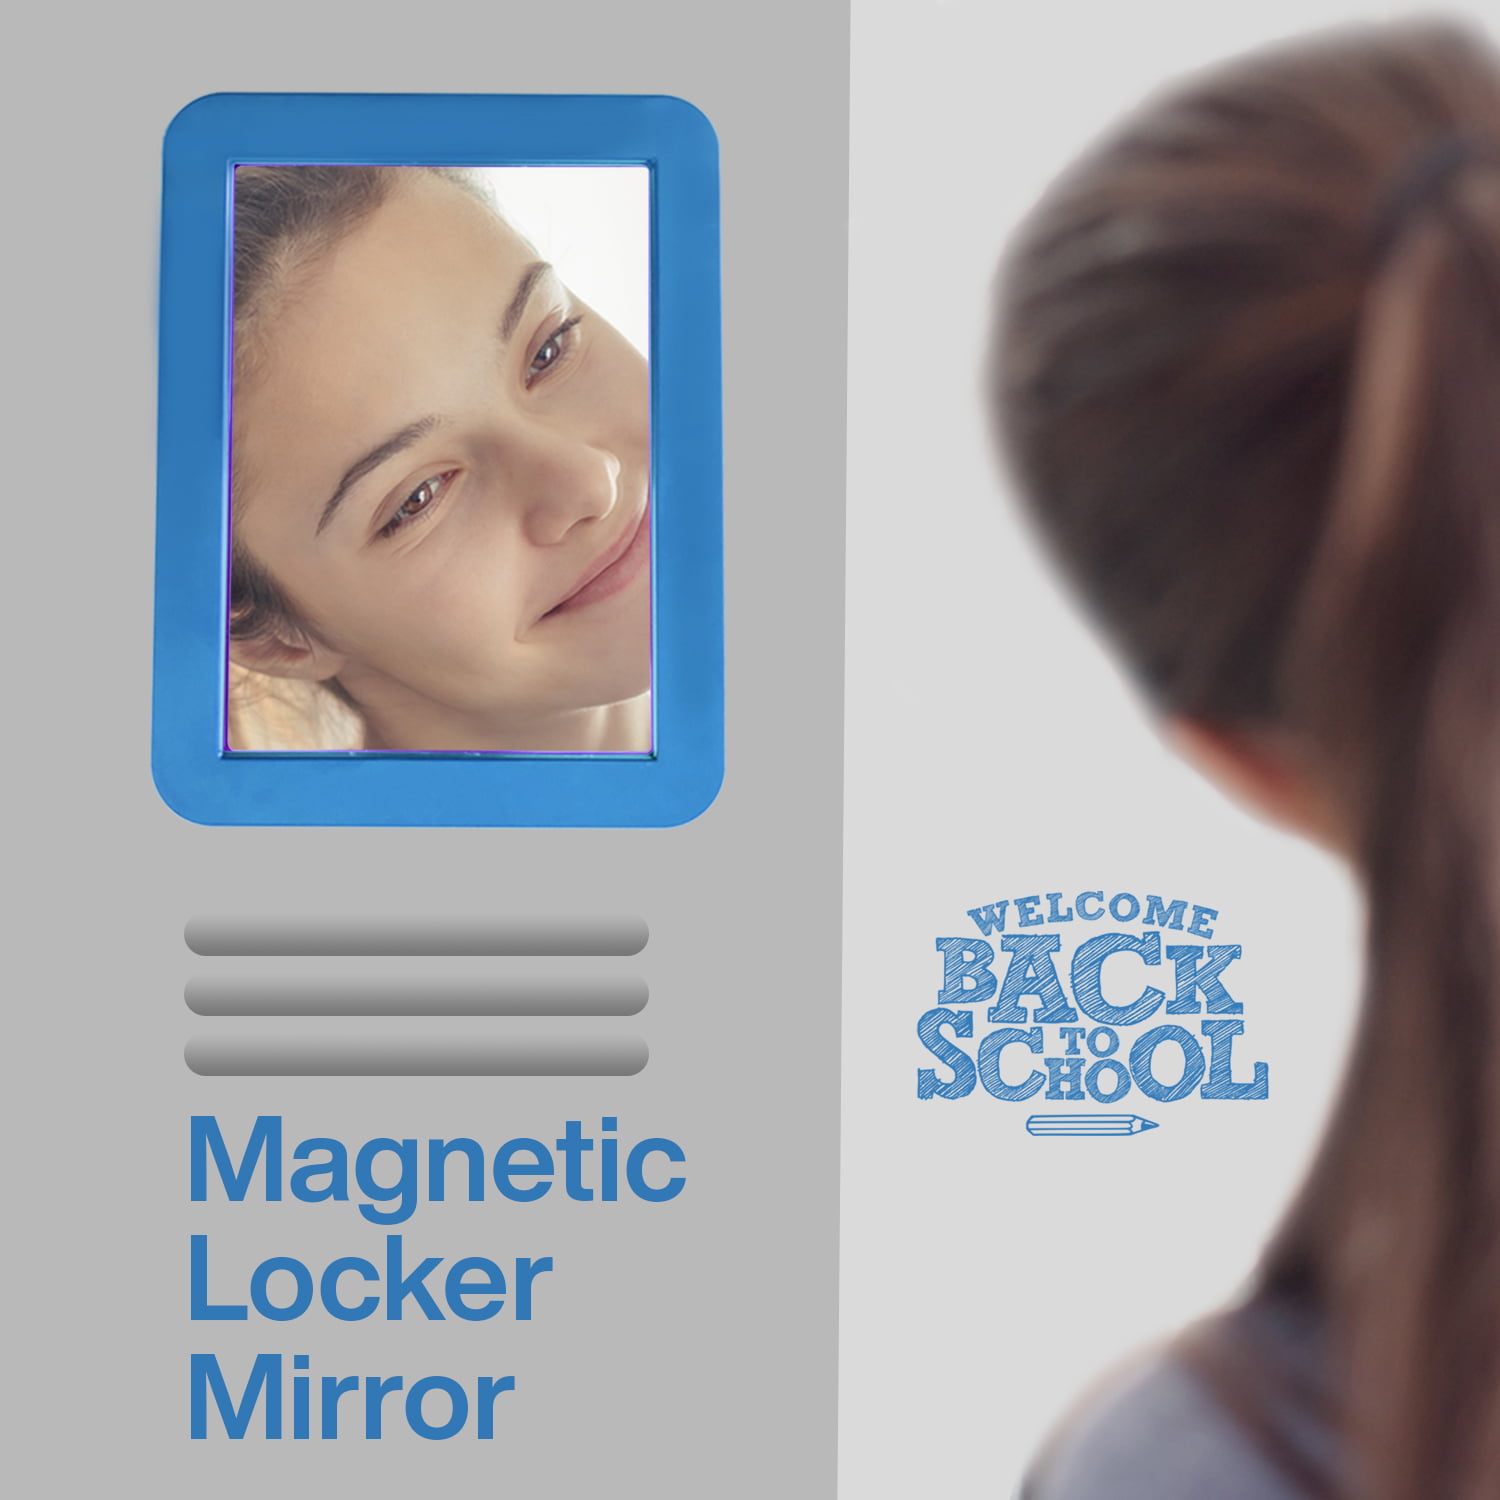 Magnetic Locker Mirror Toolbox Locker Accessory School Locker White Refrigerator Whiteboard Office Cabinet 5 x 7 Gym Locker Magnetic Makeup Mirrors 